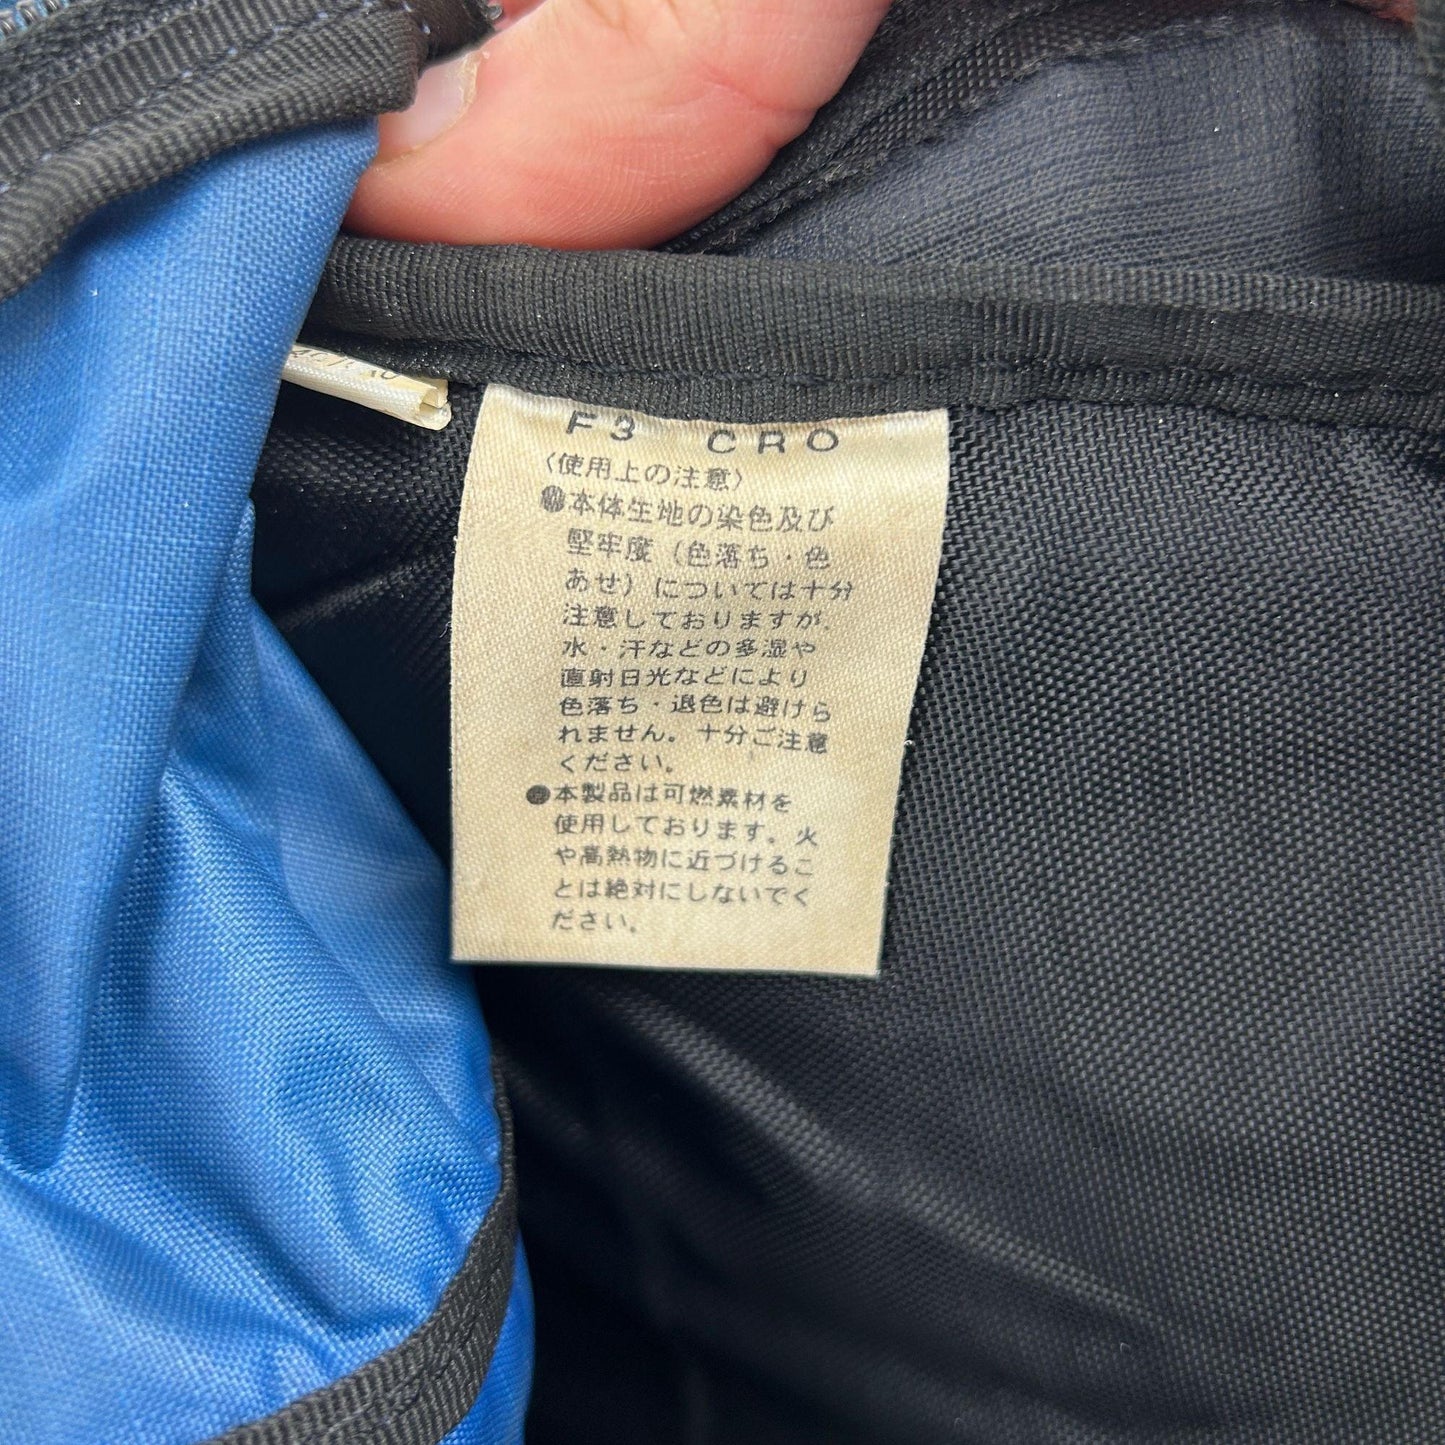 Vintage Nike Sling Bag - Known Source